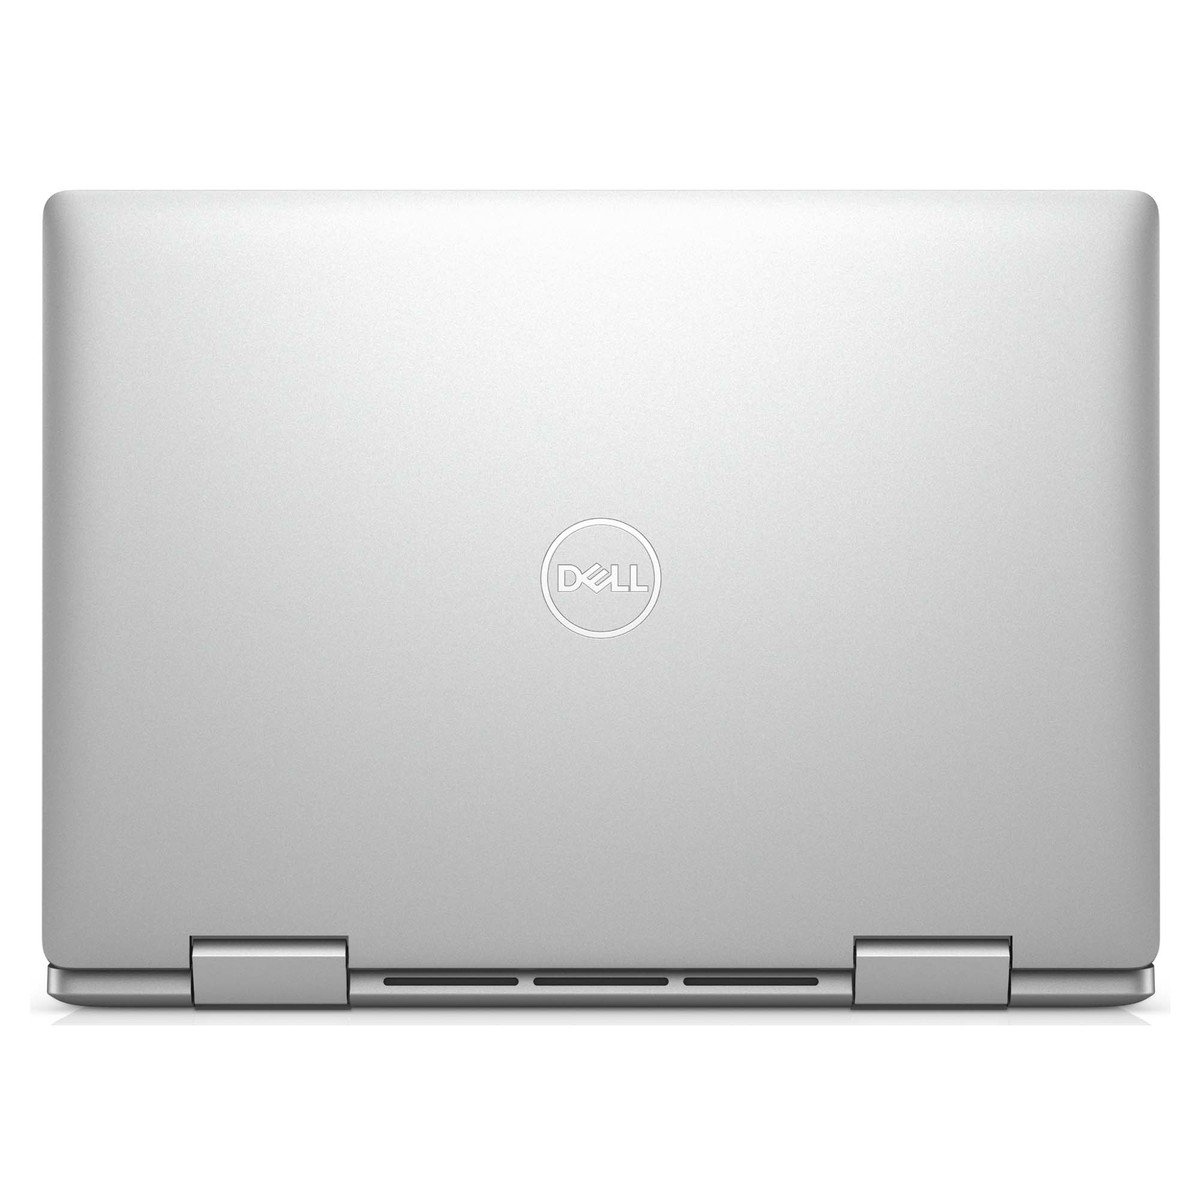 Dell 2in1 Laptop 5491 Core i5-10210, 8GB RAM, 256GB SSD, 14" Screen,Windows 10,Silver